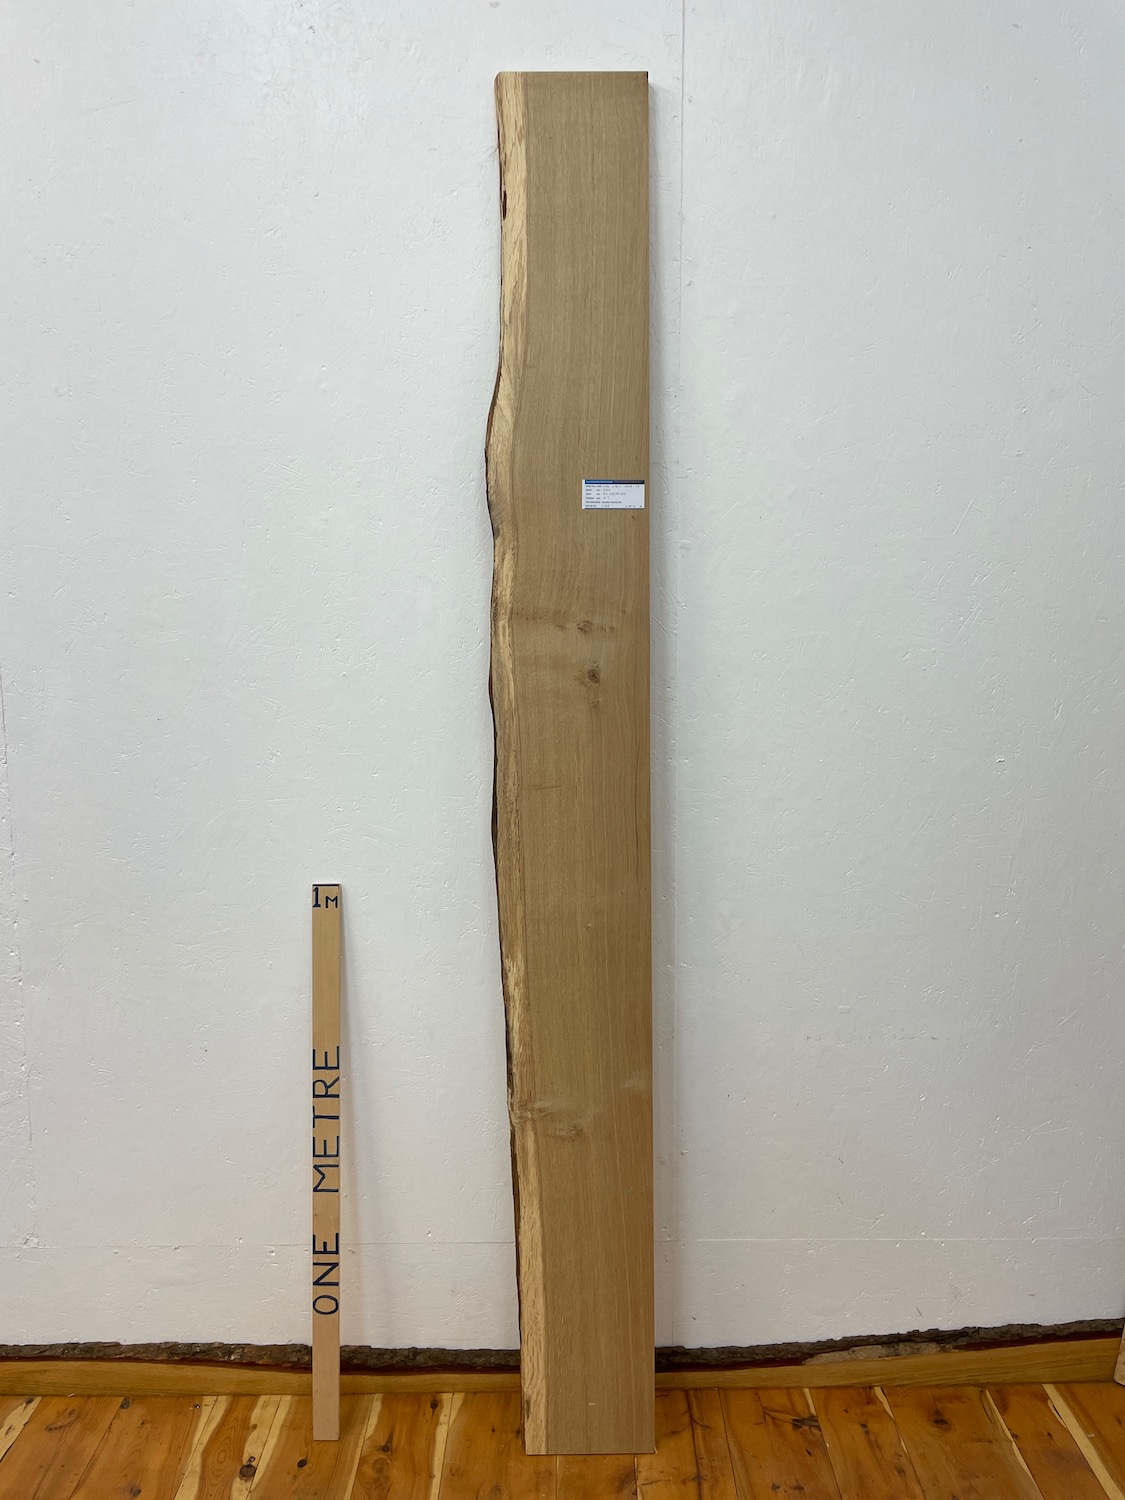 OAK Single Waney Natural Edge Board 1564A-17 Thickness 3.5cm Kiln Dried Planed & Thicknessed Seasoned Hardwood Live Edge Shelf